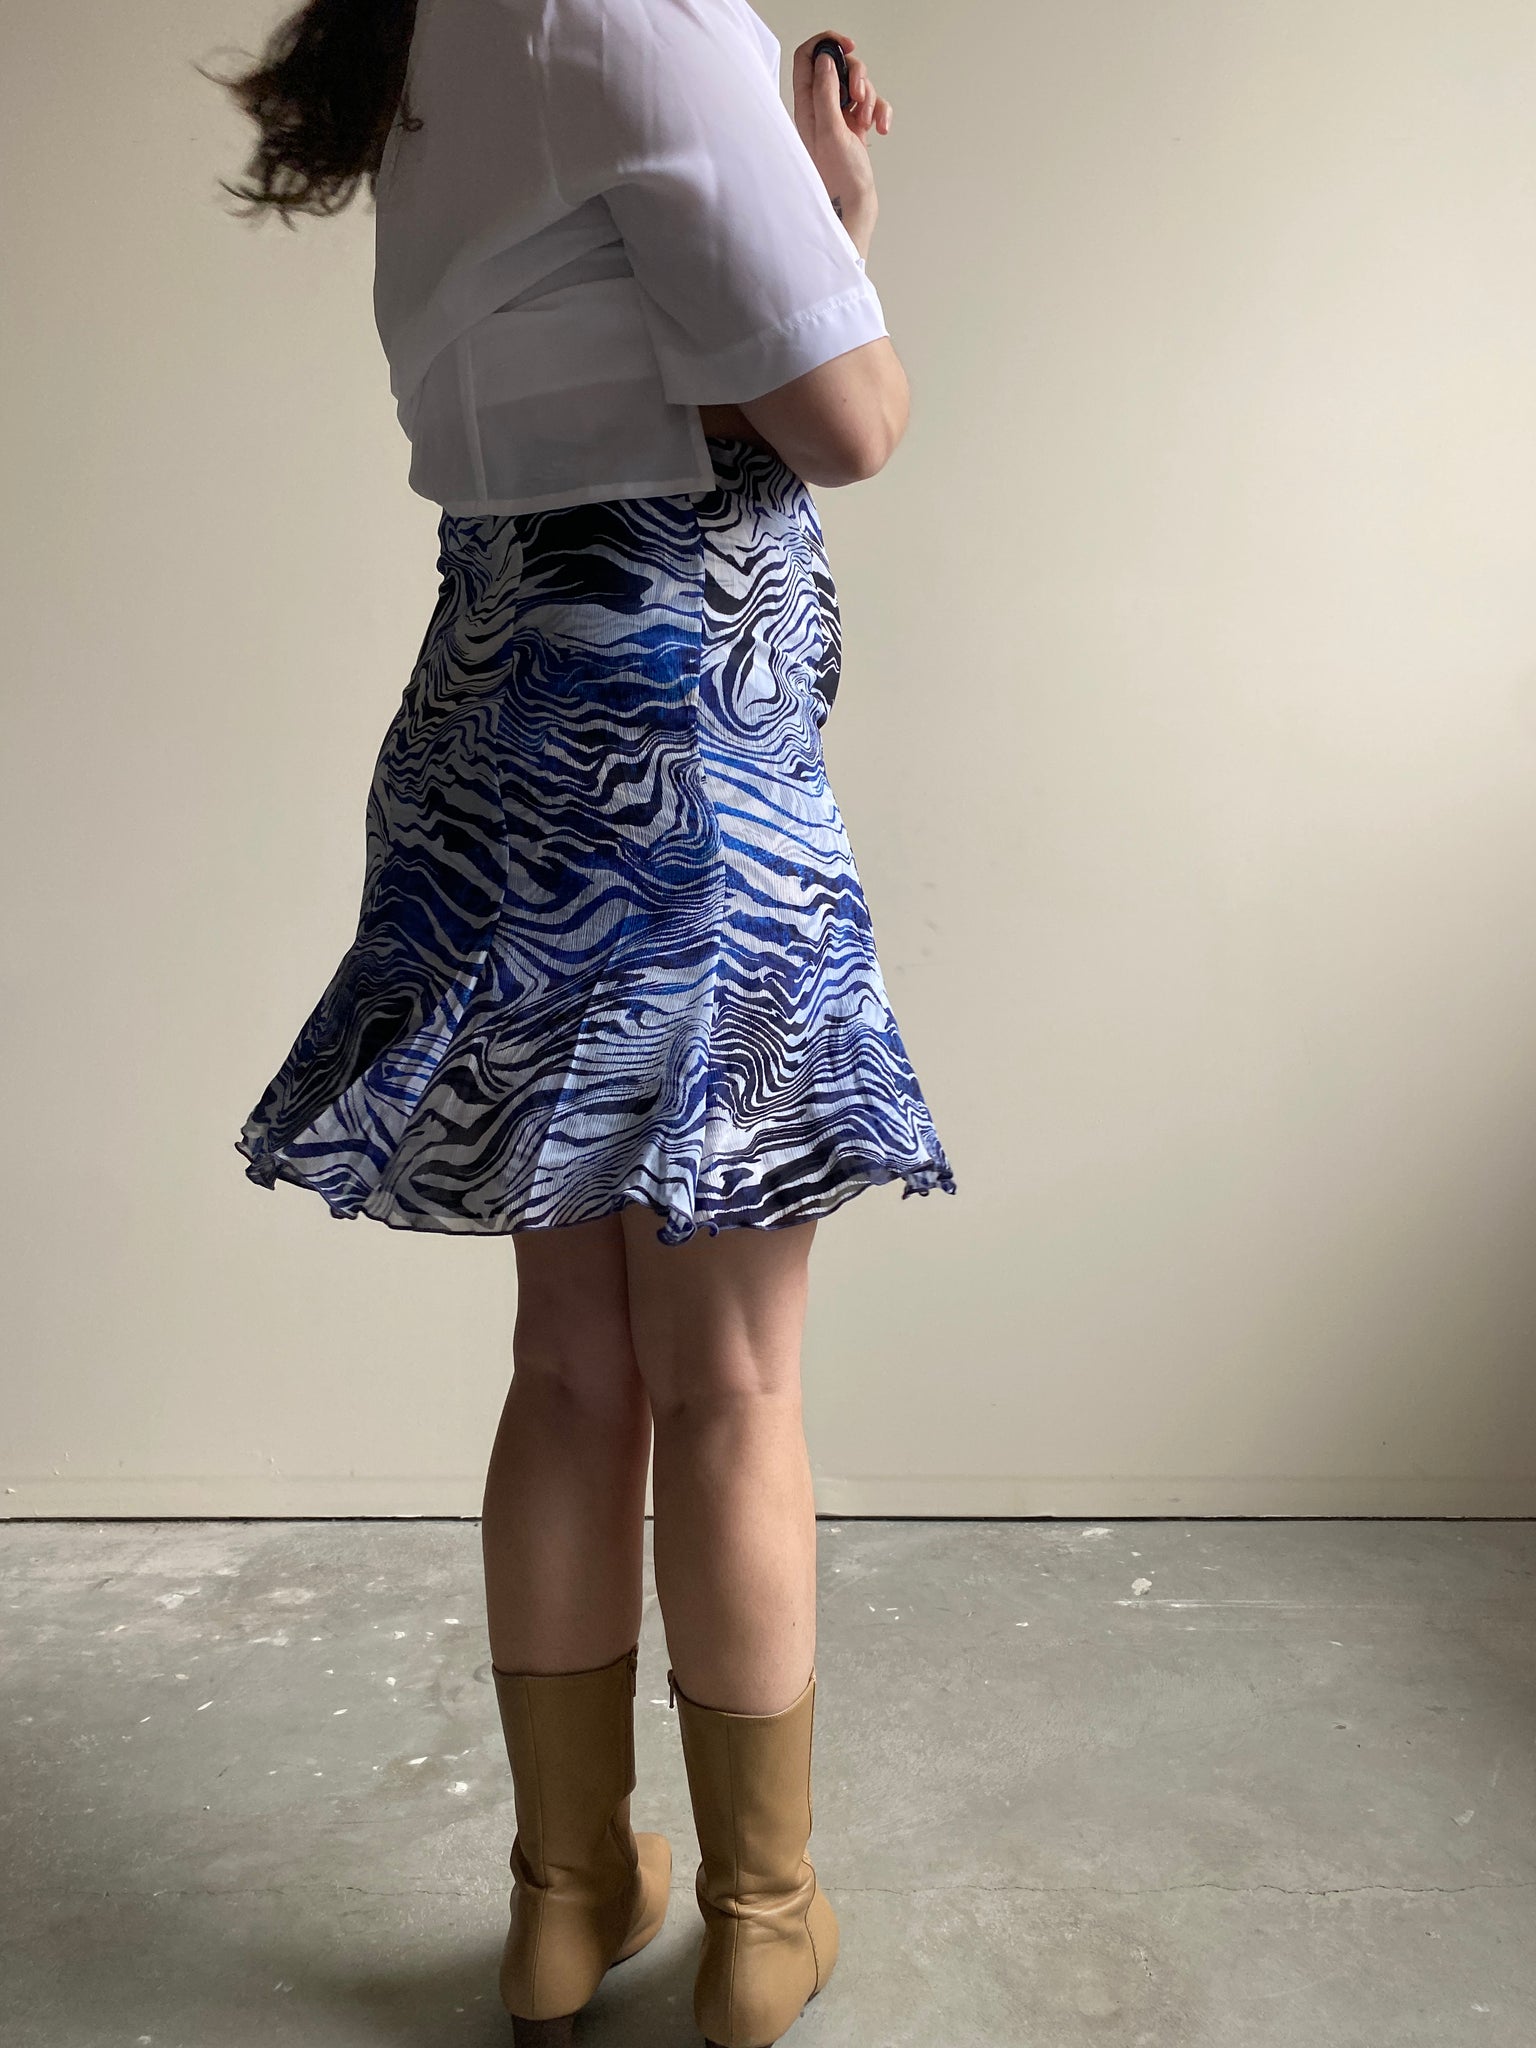 Blue, white, and black funky silk skirt by Leggiadro (S)